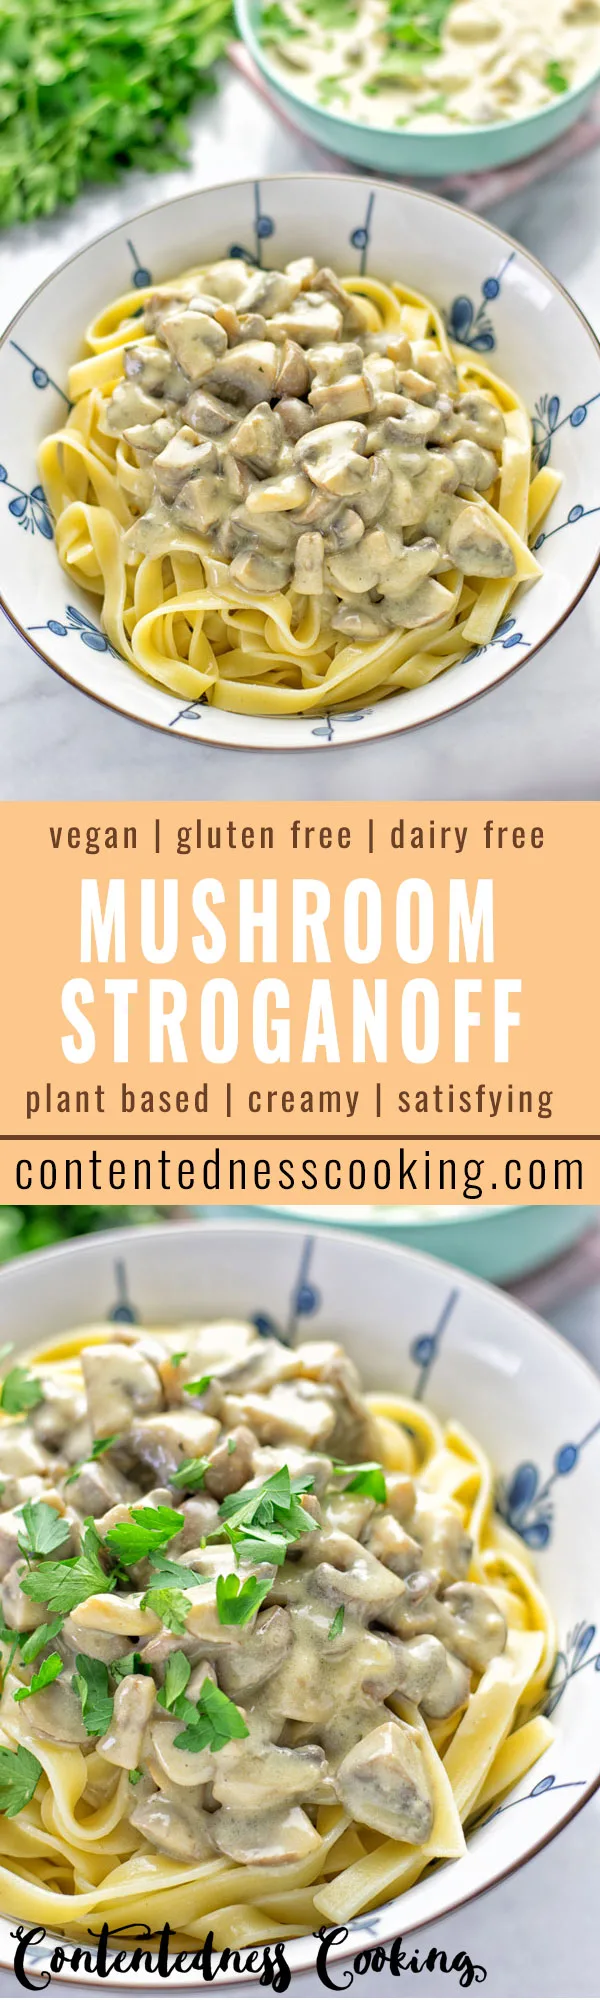 Vegan Mushroom Stroganoff | #vegan #glutenfree #contentednesscooking